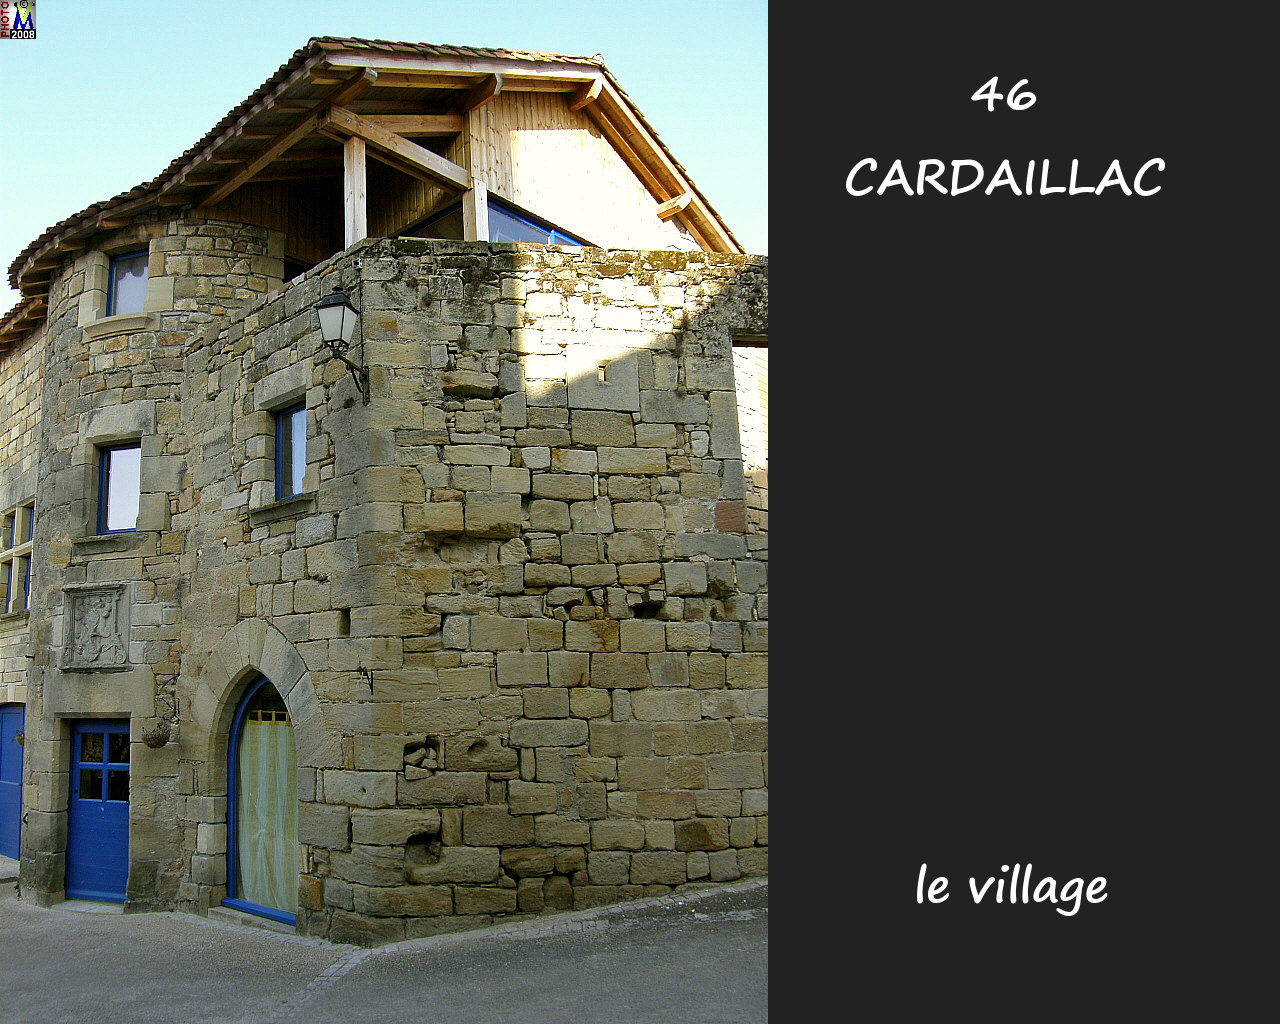 46CARDAILLAC_village_110.jpg